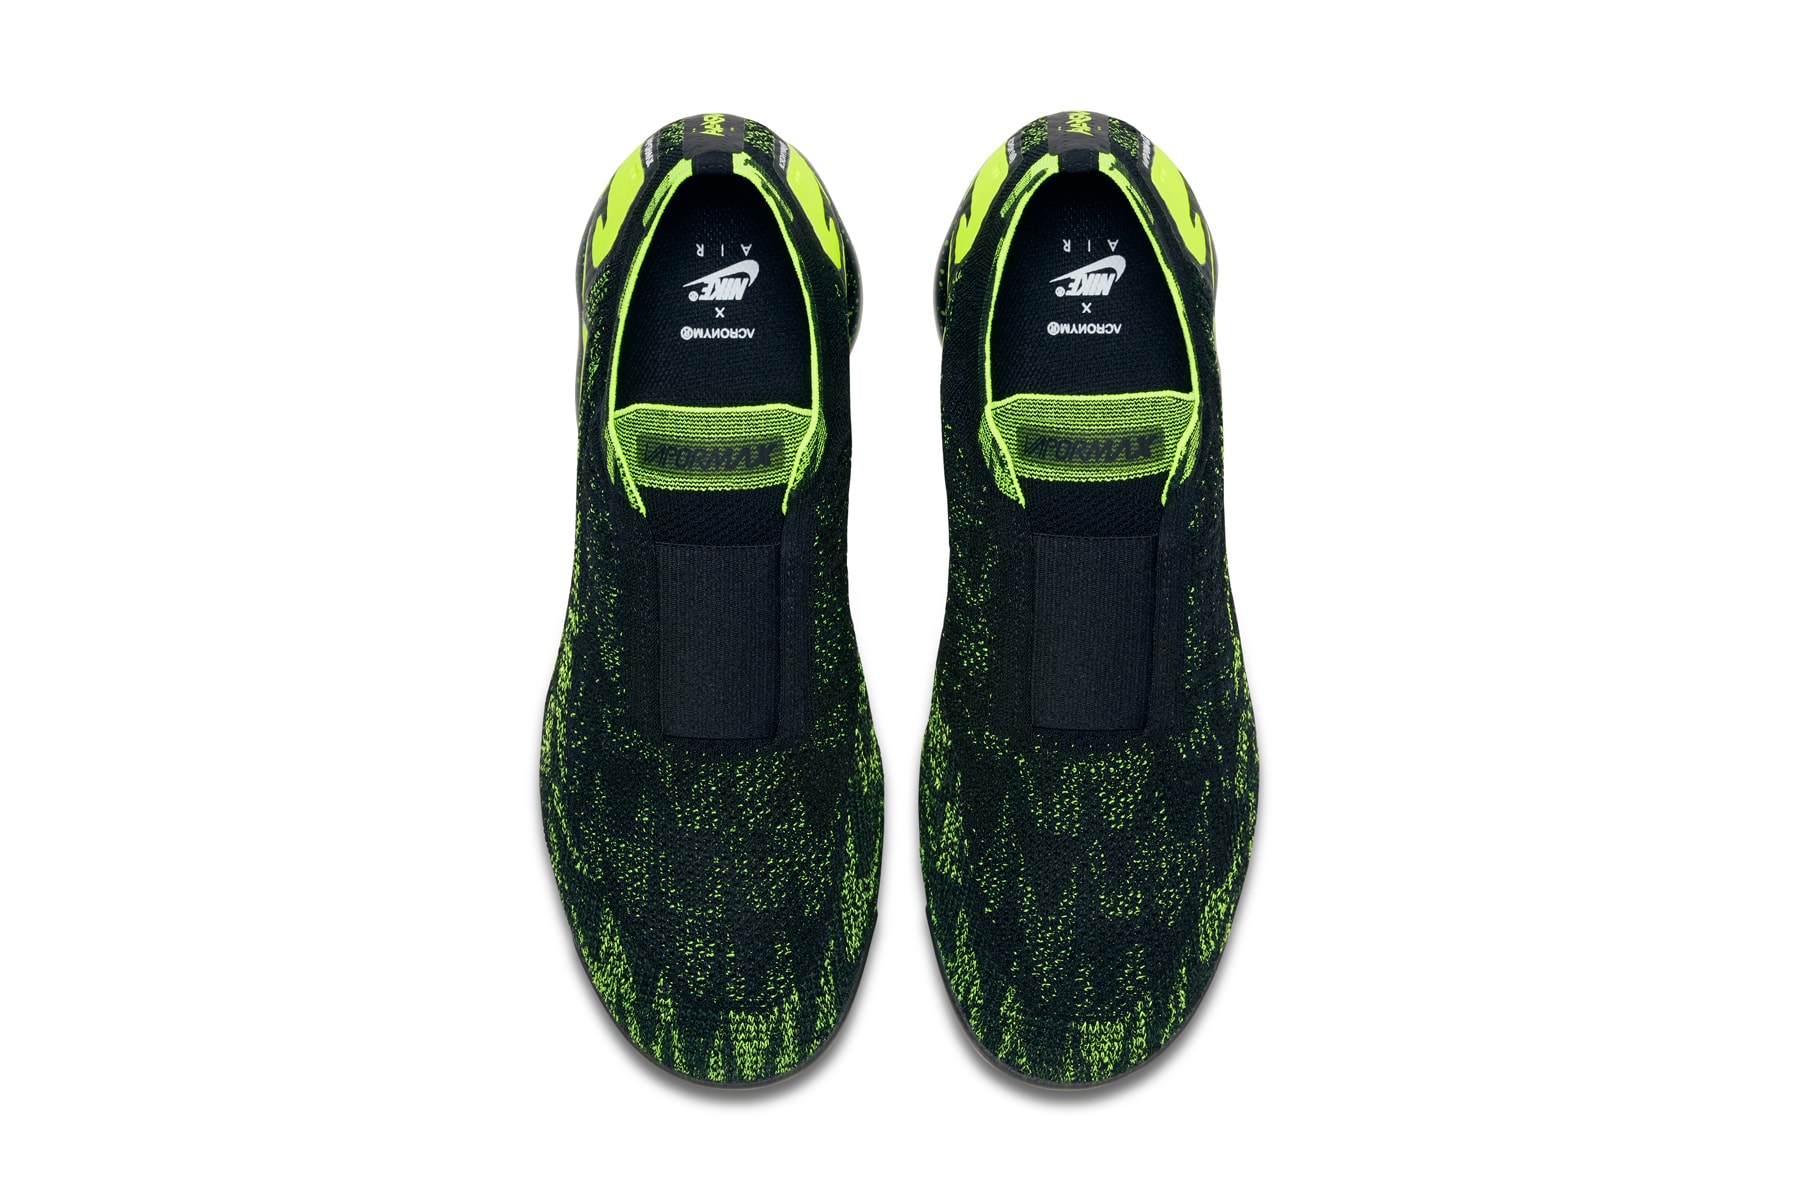 ACRONYM x Nike Air VaporMax Moc 2 Air Max Day footwear release dates 2018 march Errolson Hugh John Mayer